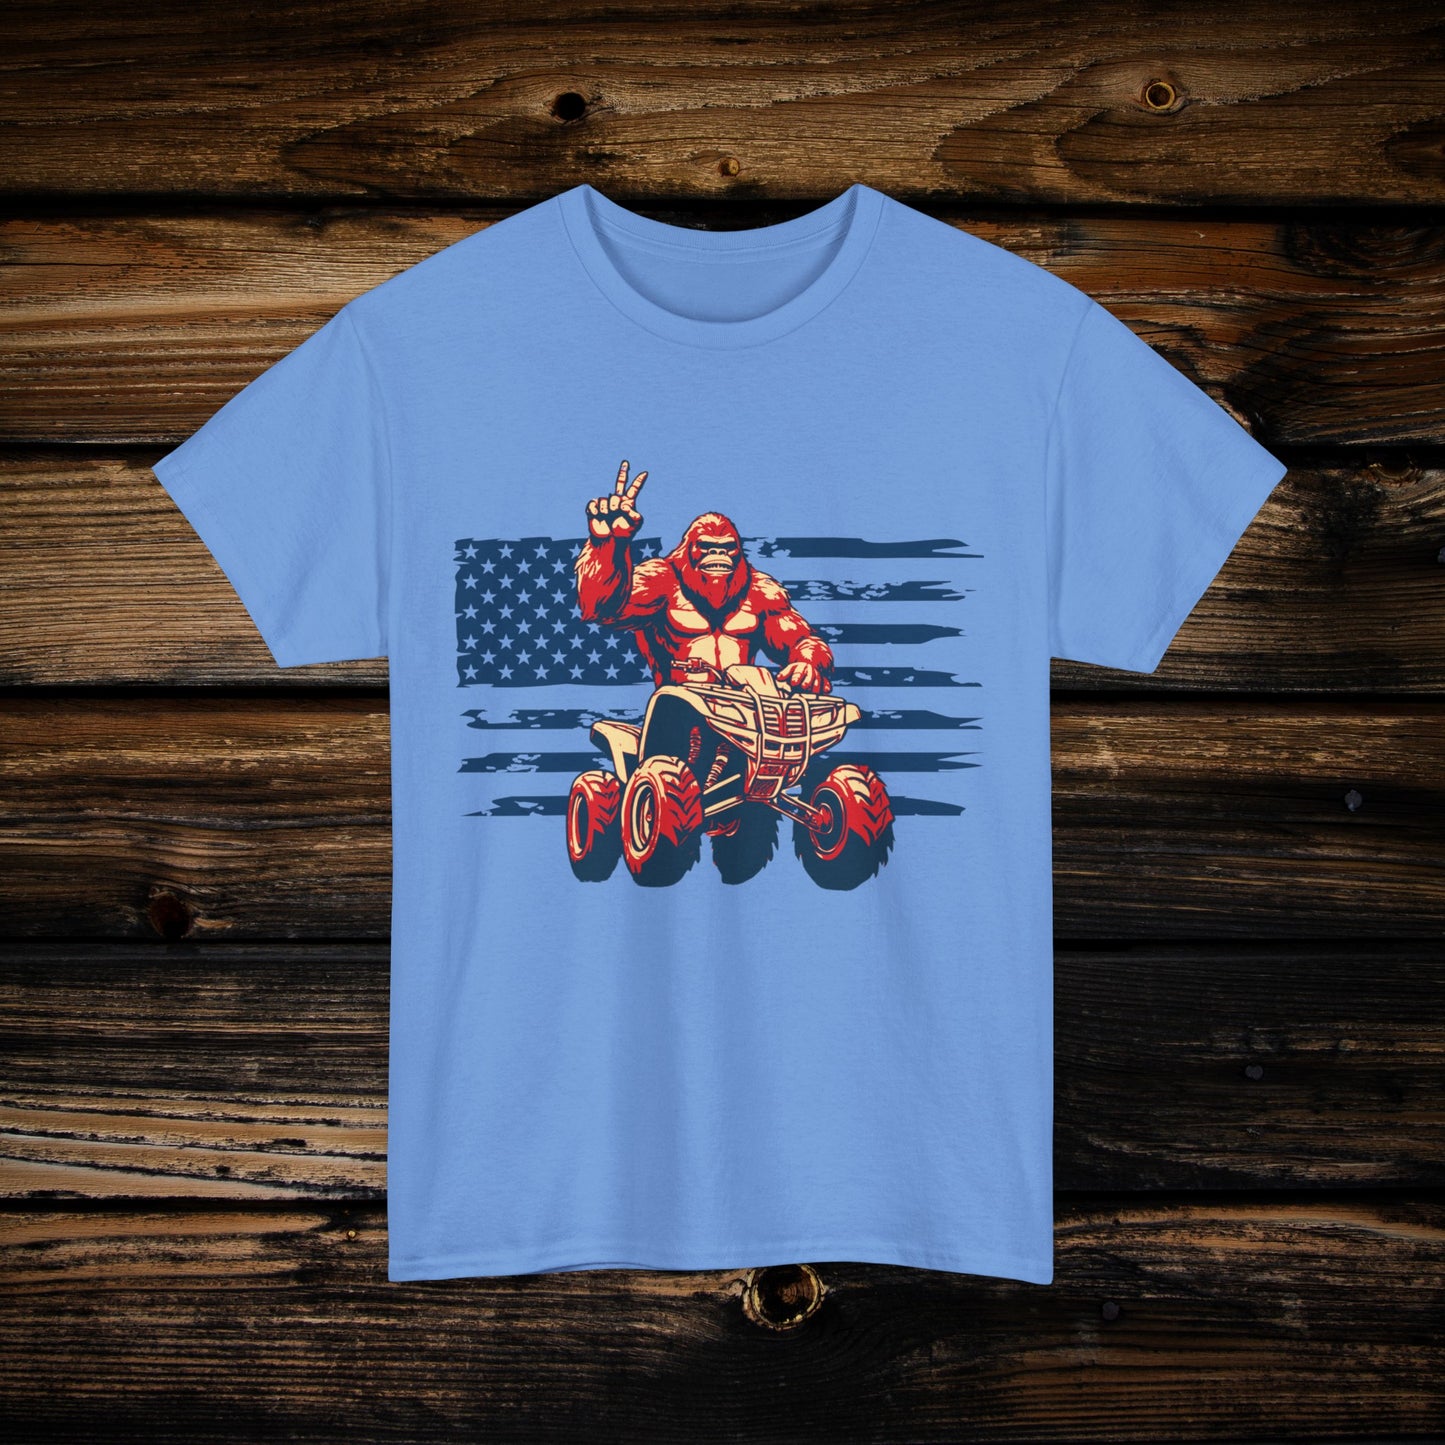 Mens BigFoot Shirt | BigFoot Riding a FourWheeler Shirt | Patriotic Flag & BigFoot Shirt | HEAVY Cotton Adult Unisex t shirt | ATV shirt for men | Fourwheeler shirts for boys